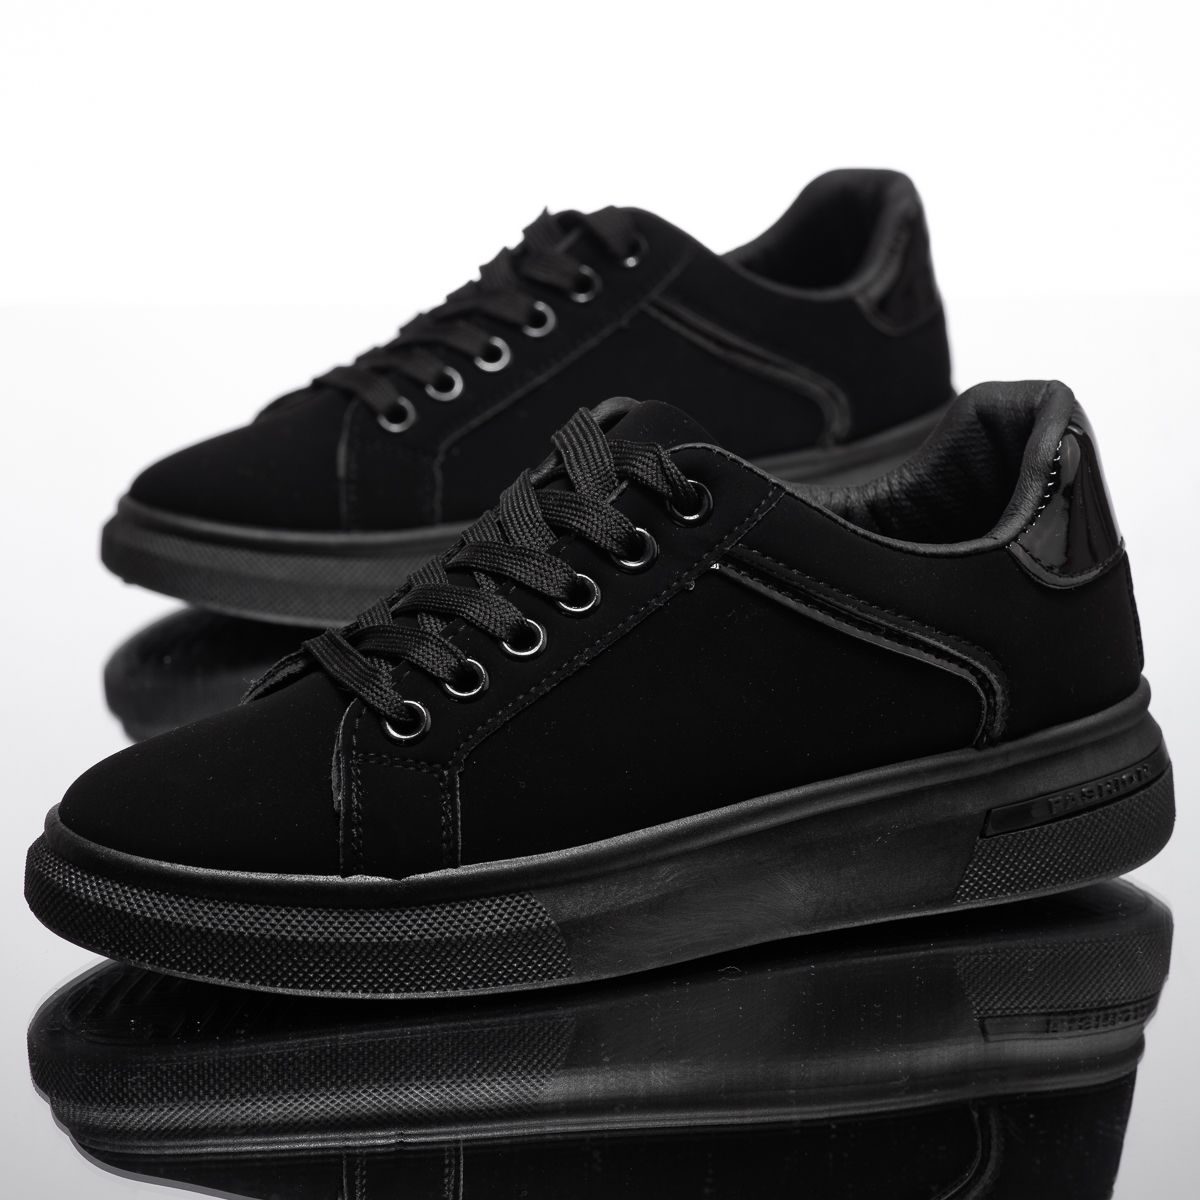 Дамски спортни обувки Libra черен #14155